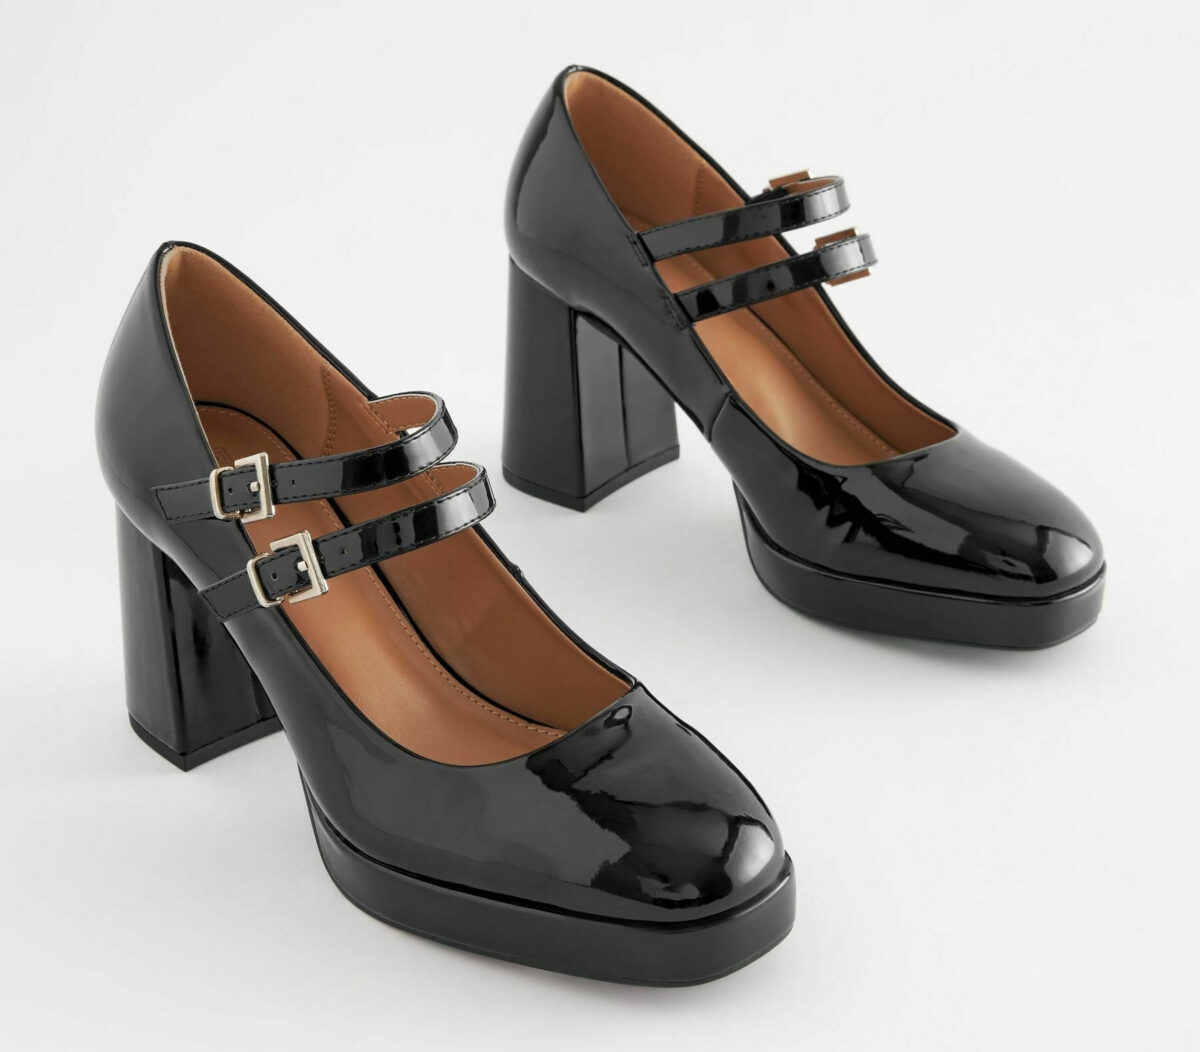 Forever comfort platform Mary Jane shoes Scarpe con plateau, Next, acquistabili su Zalando